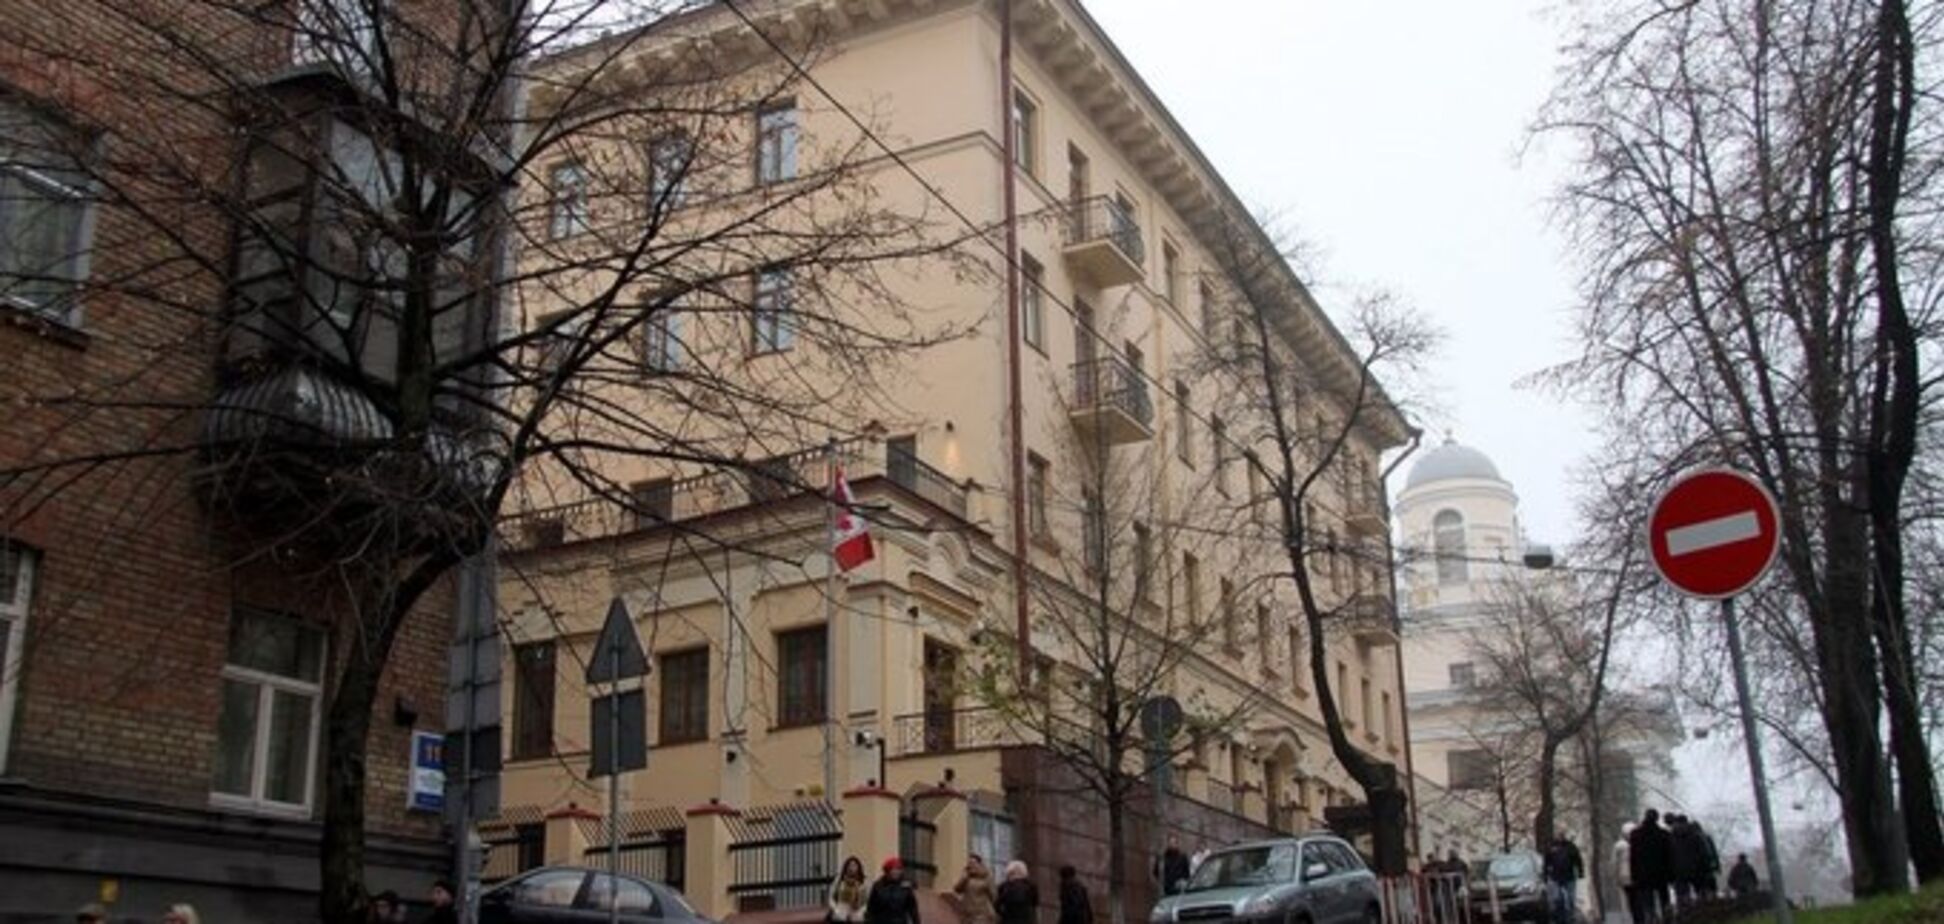 Елизавета II купила недвижимость в центре Киева. Фото здания